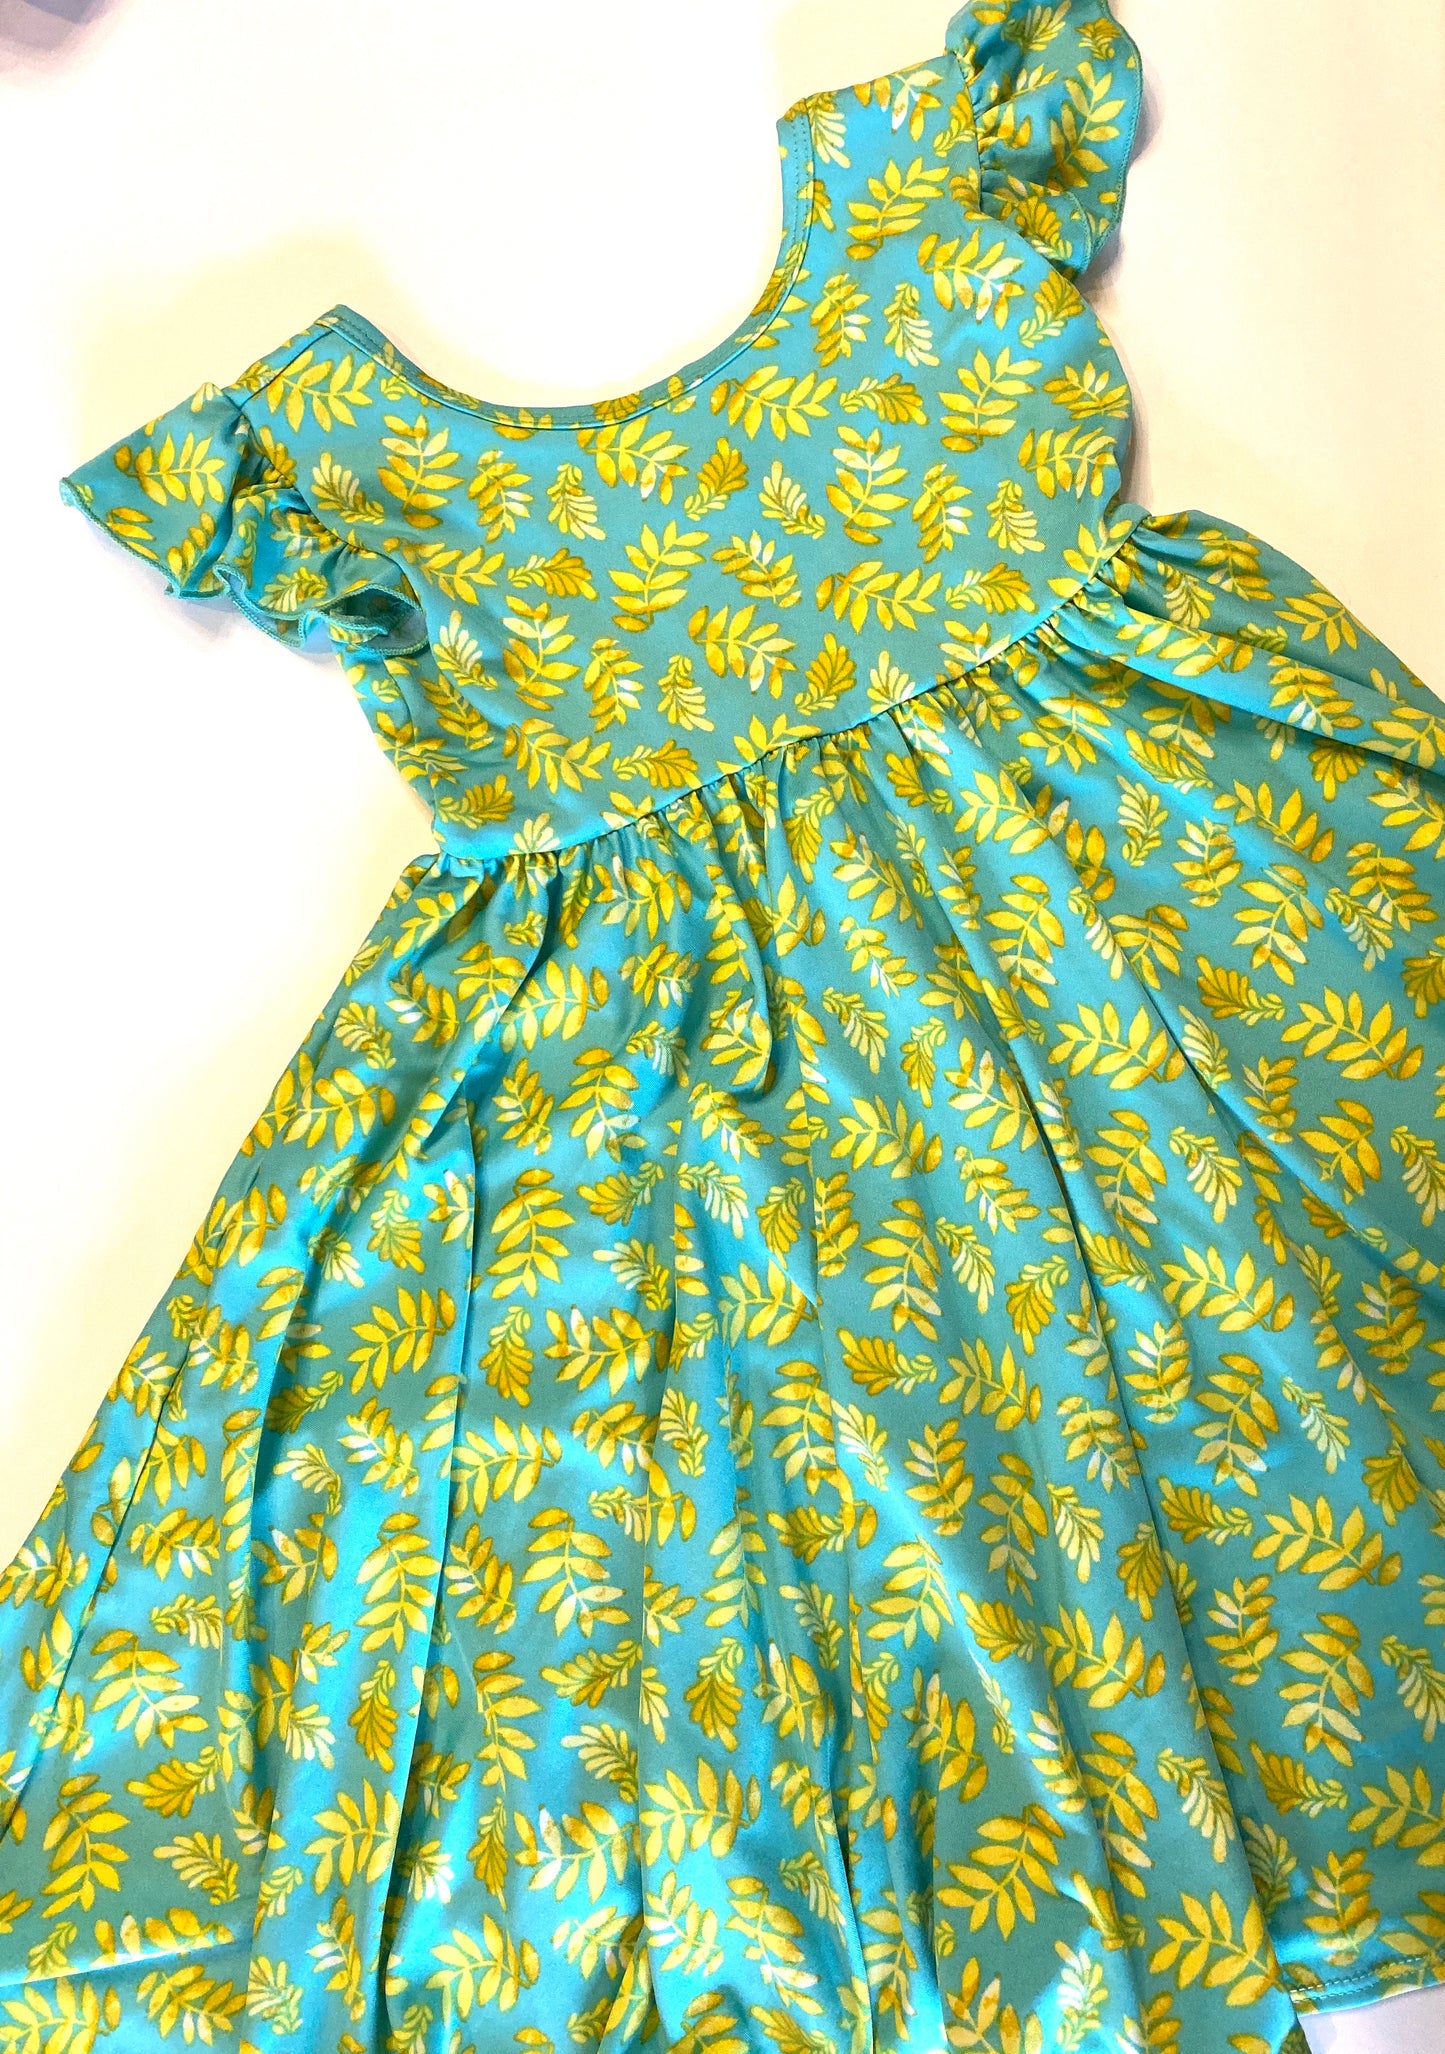 Aqua and Gold Dress Size 5/6 - Empire Style Dress- Girls Dress